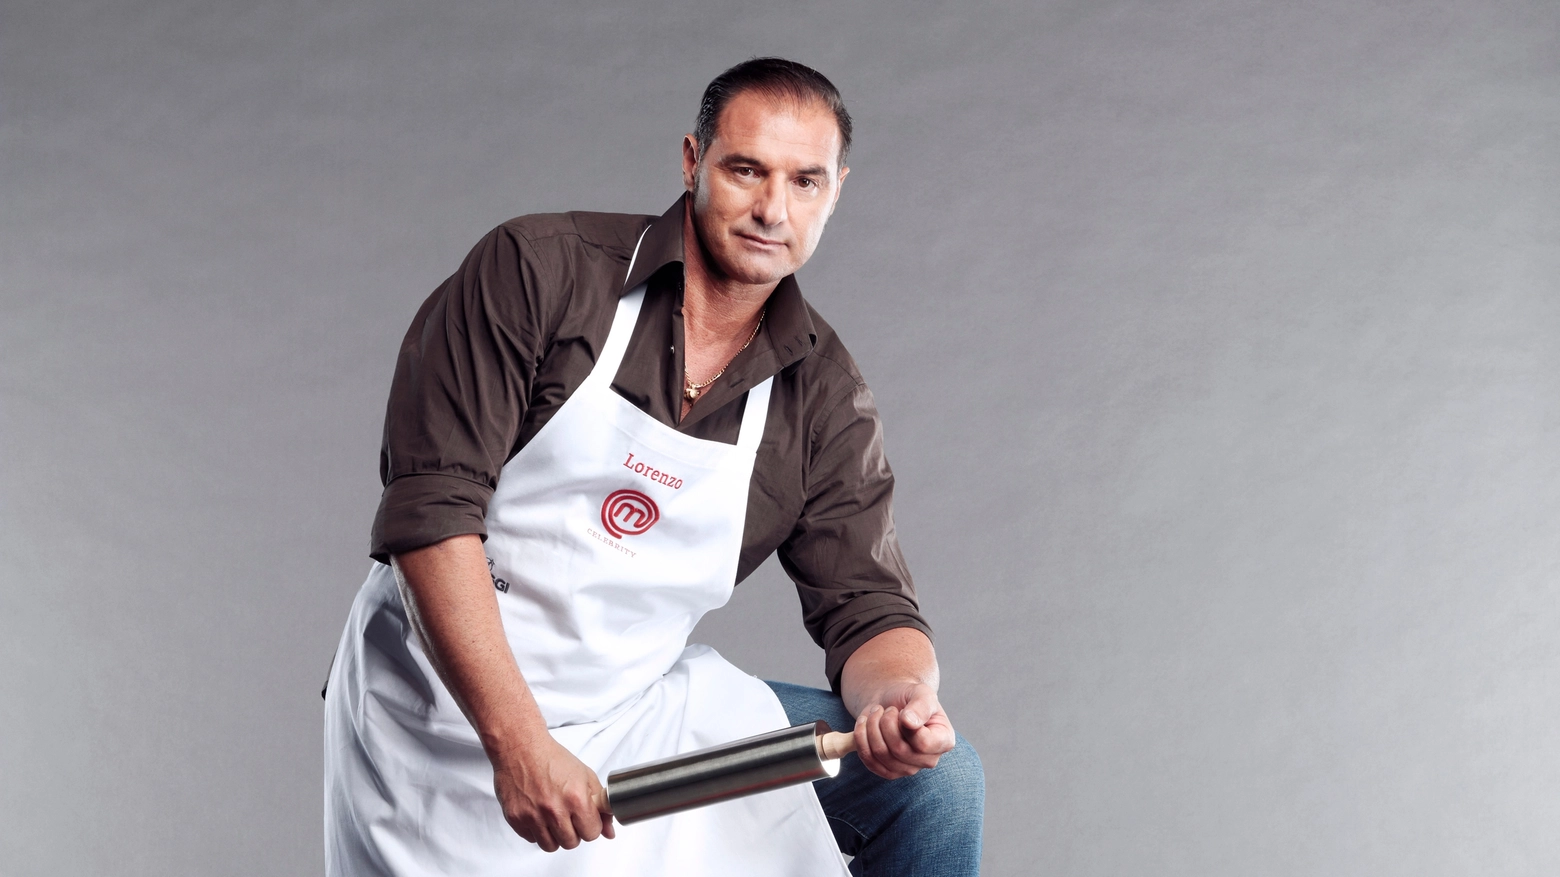 Lorenzo Amoruso nei panni di chef